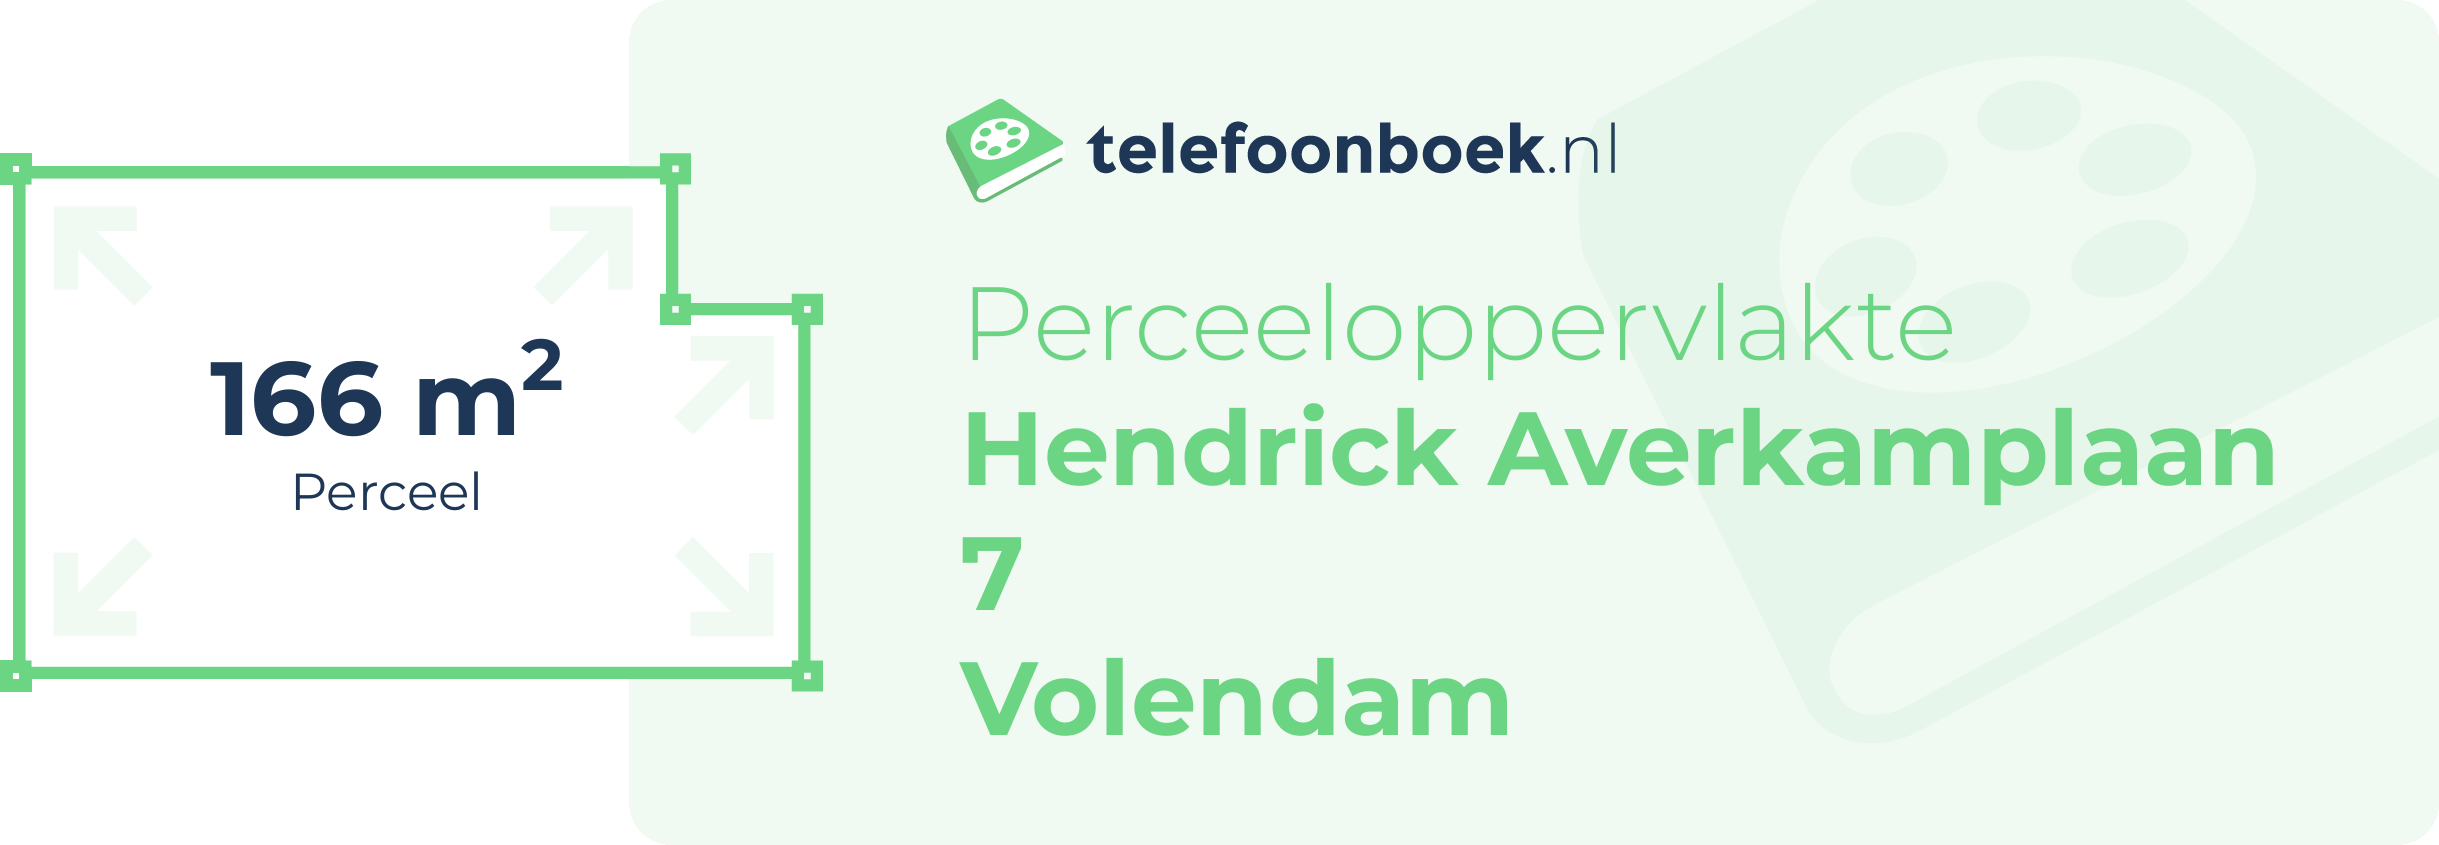 Perceeloppervlakte Hendrick Averkamplaan 7 Volendam